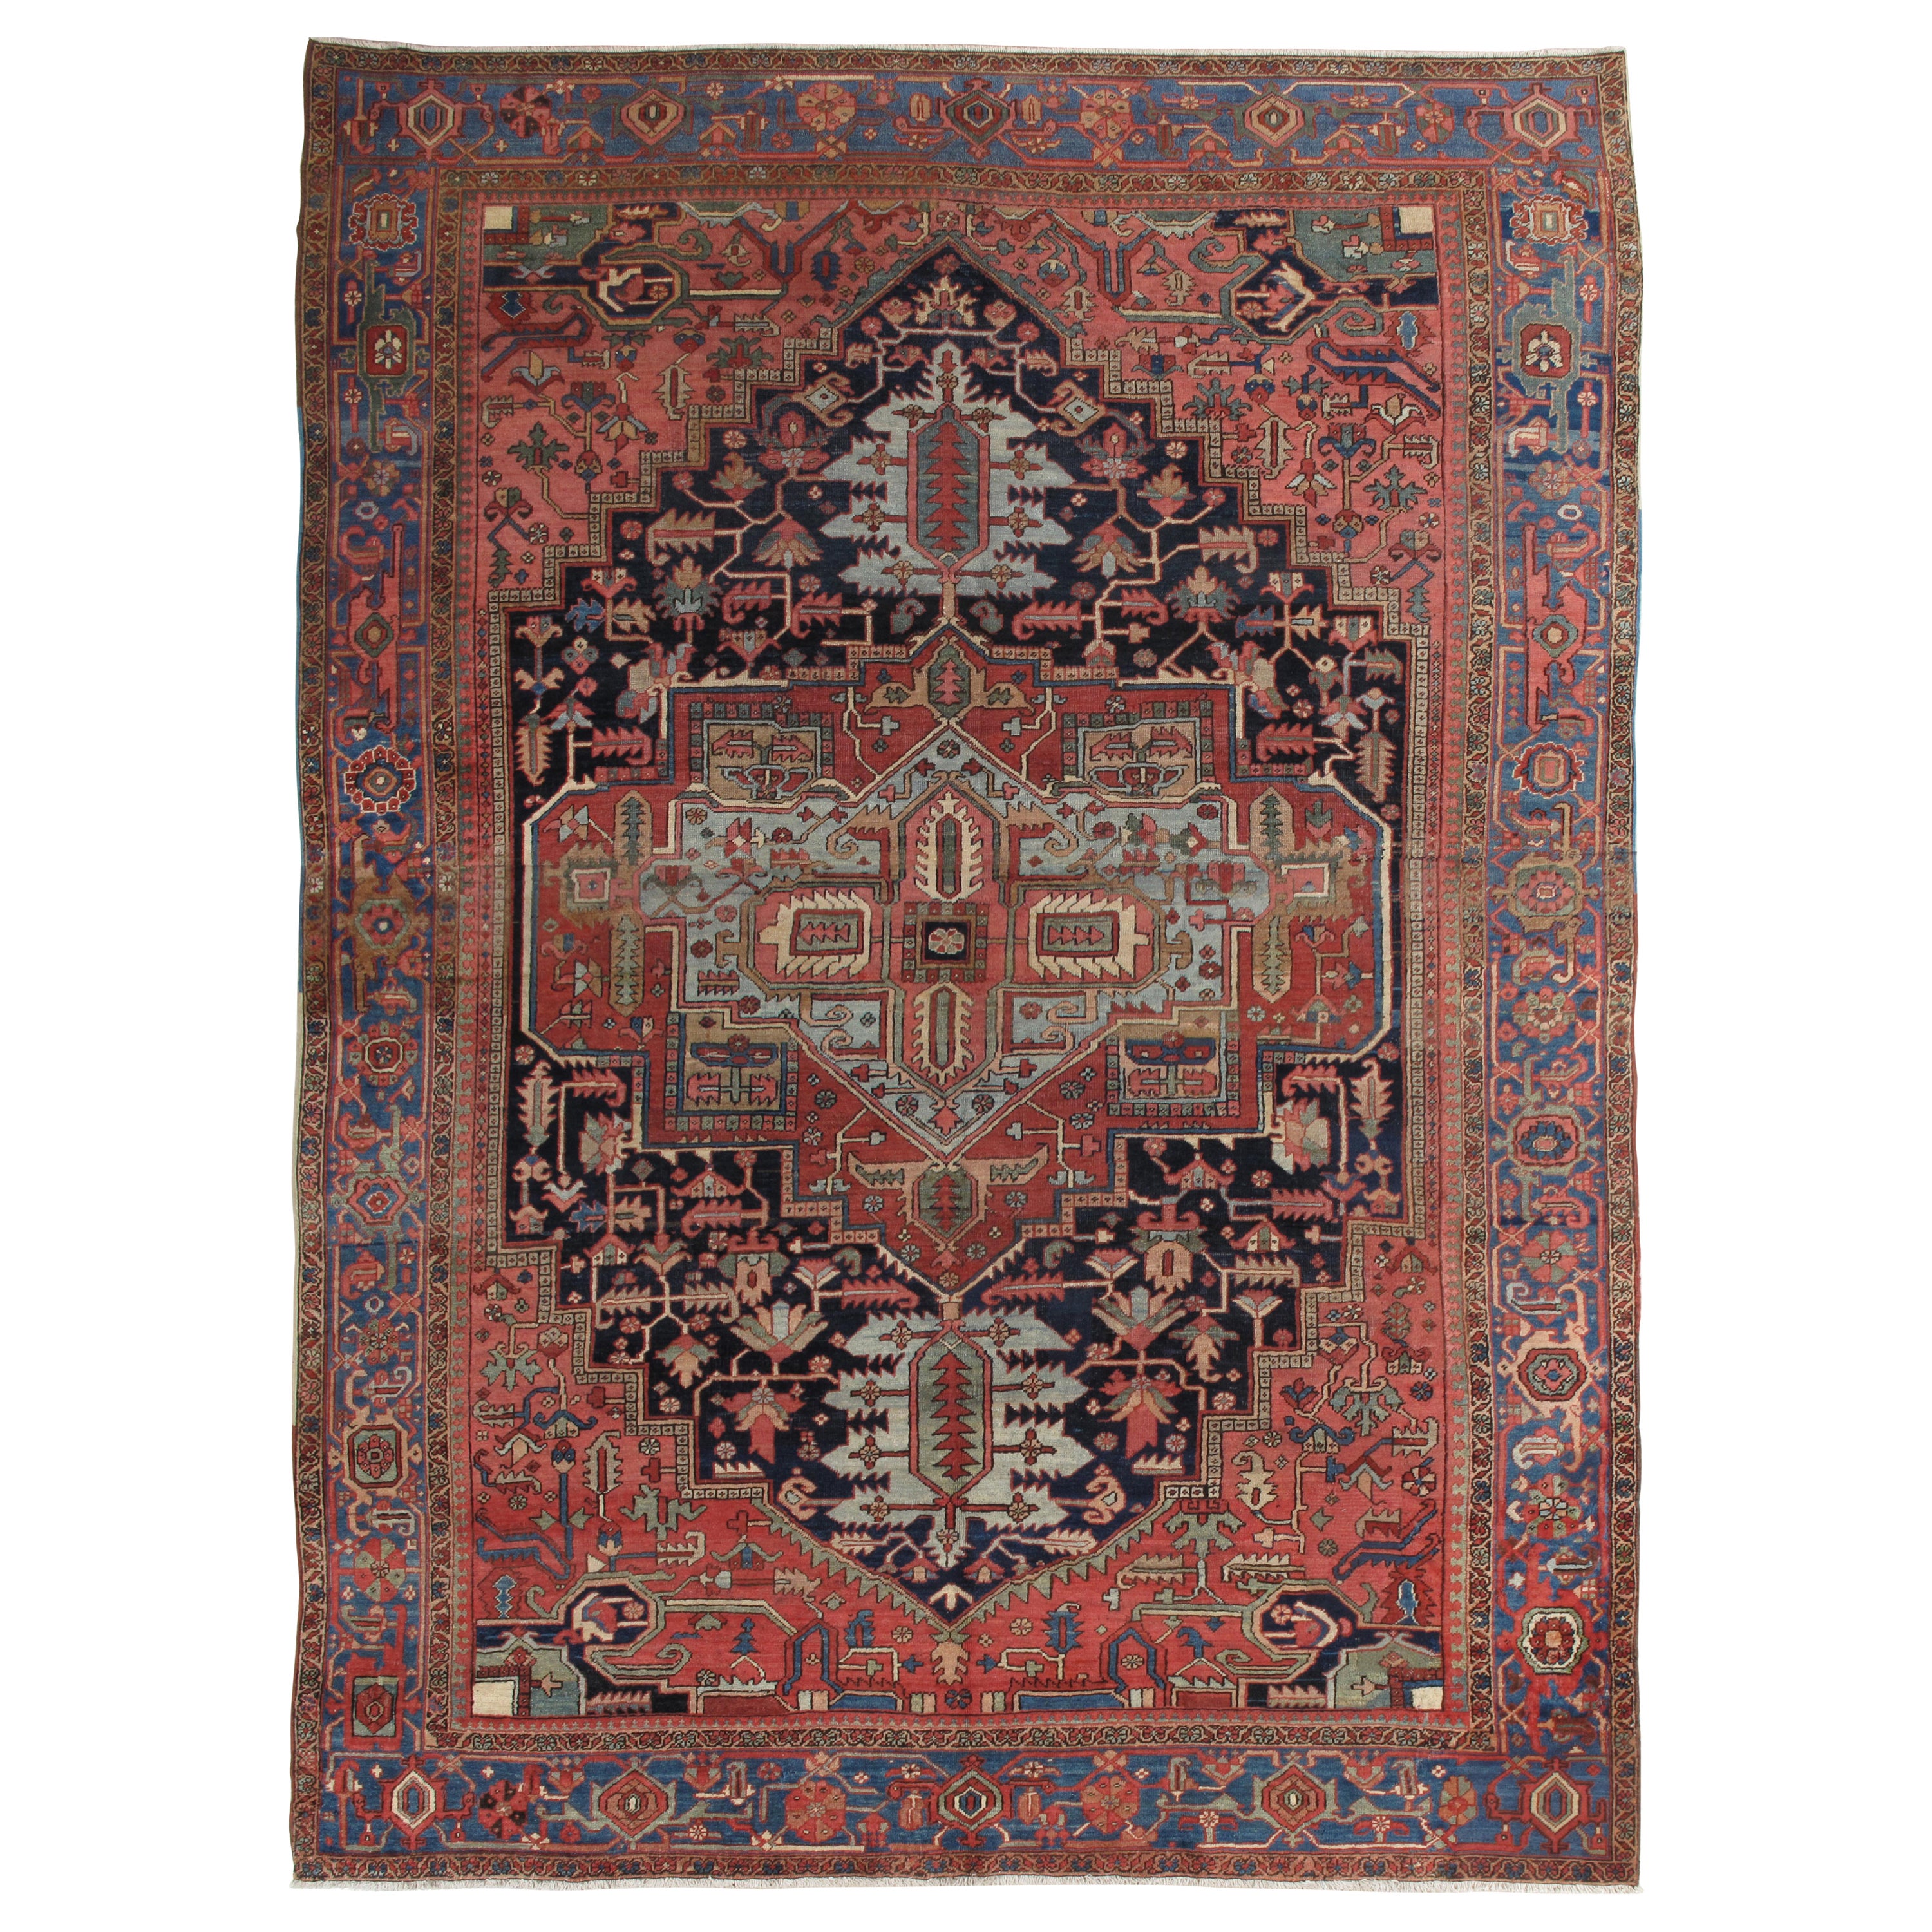 Antique Persian Heriz Carpet Handmade Wool Oriental Rug, Rust, Navy, Light Blue